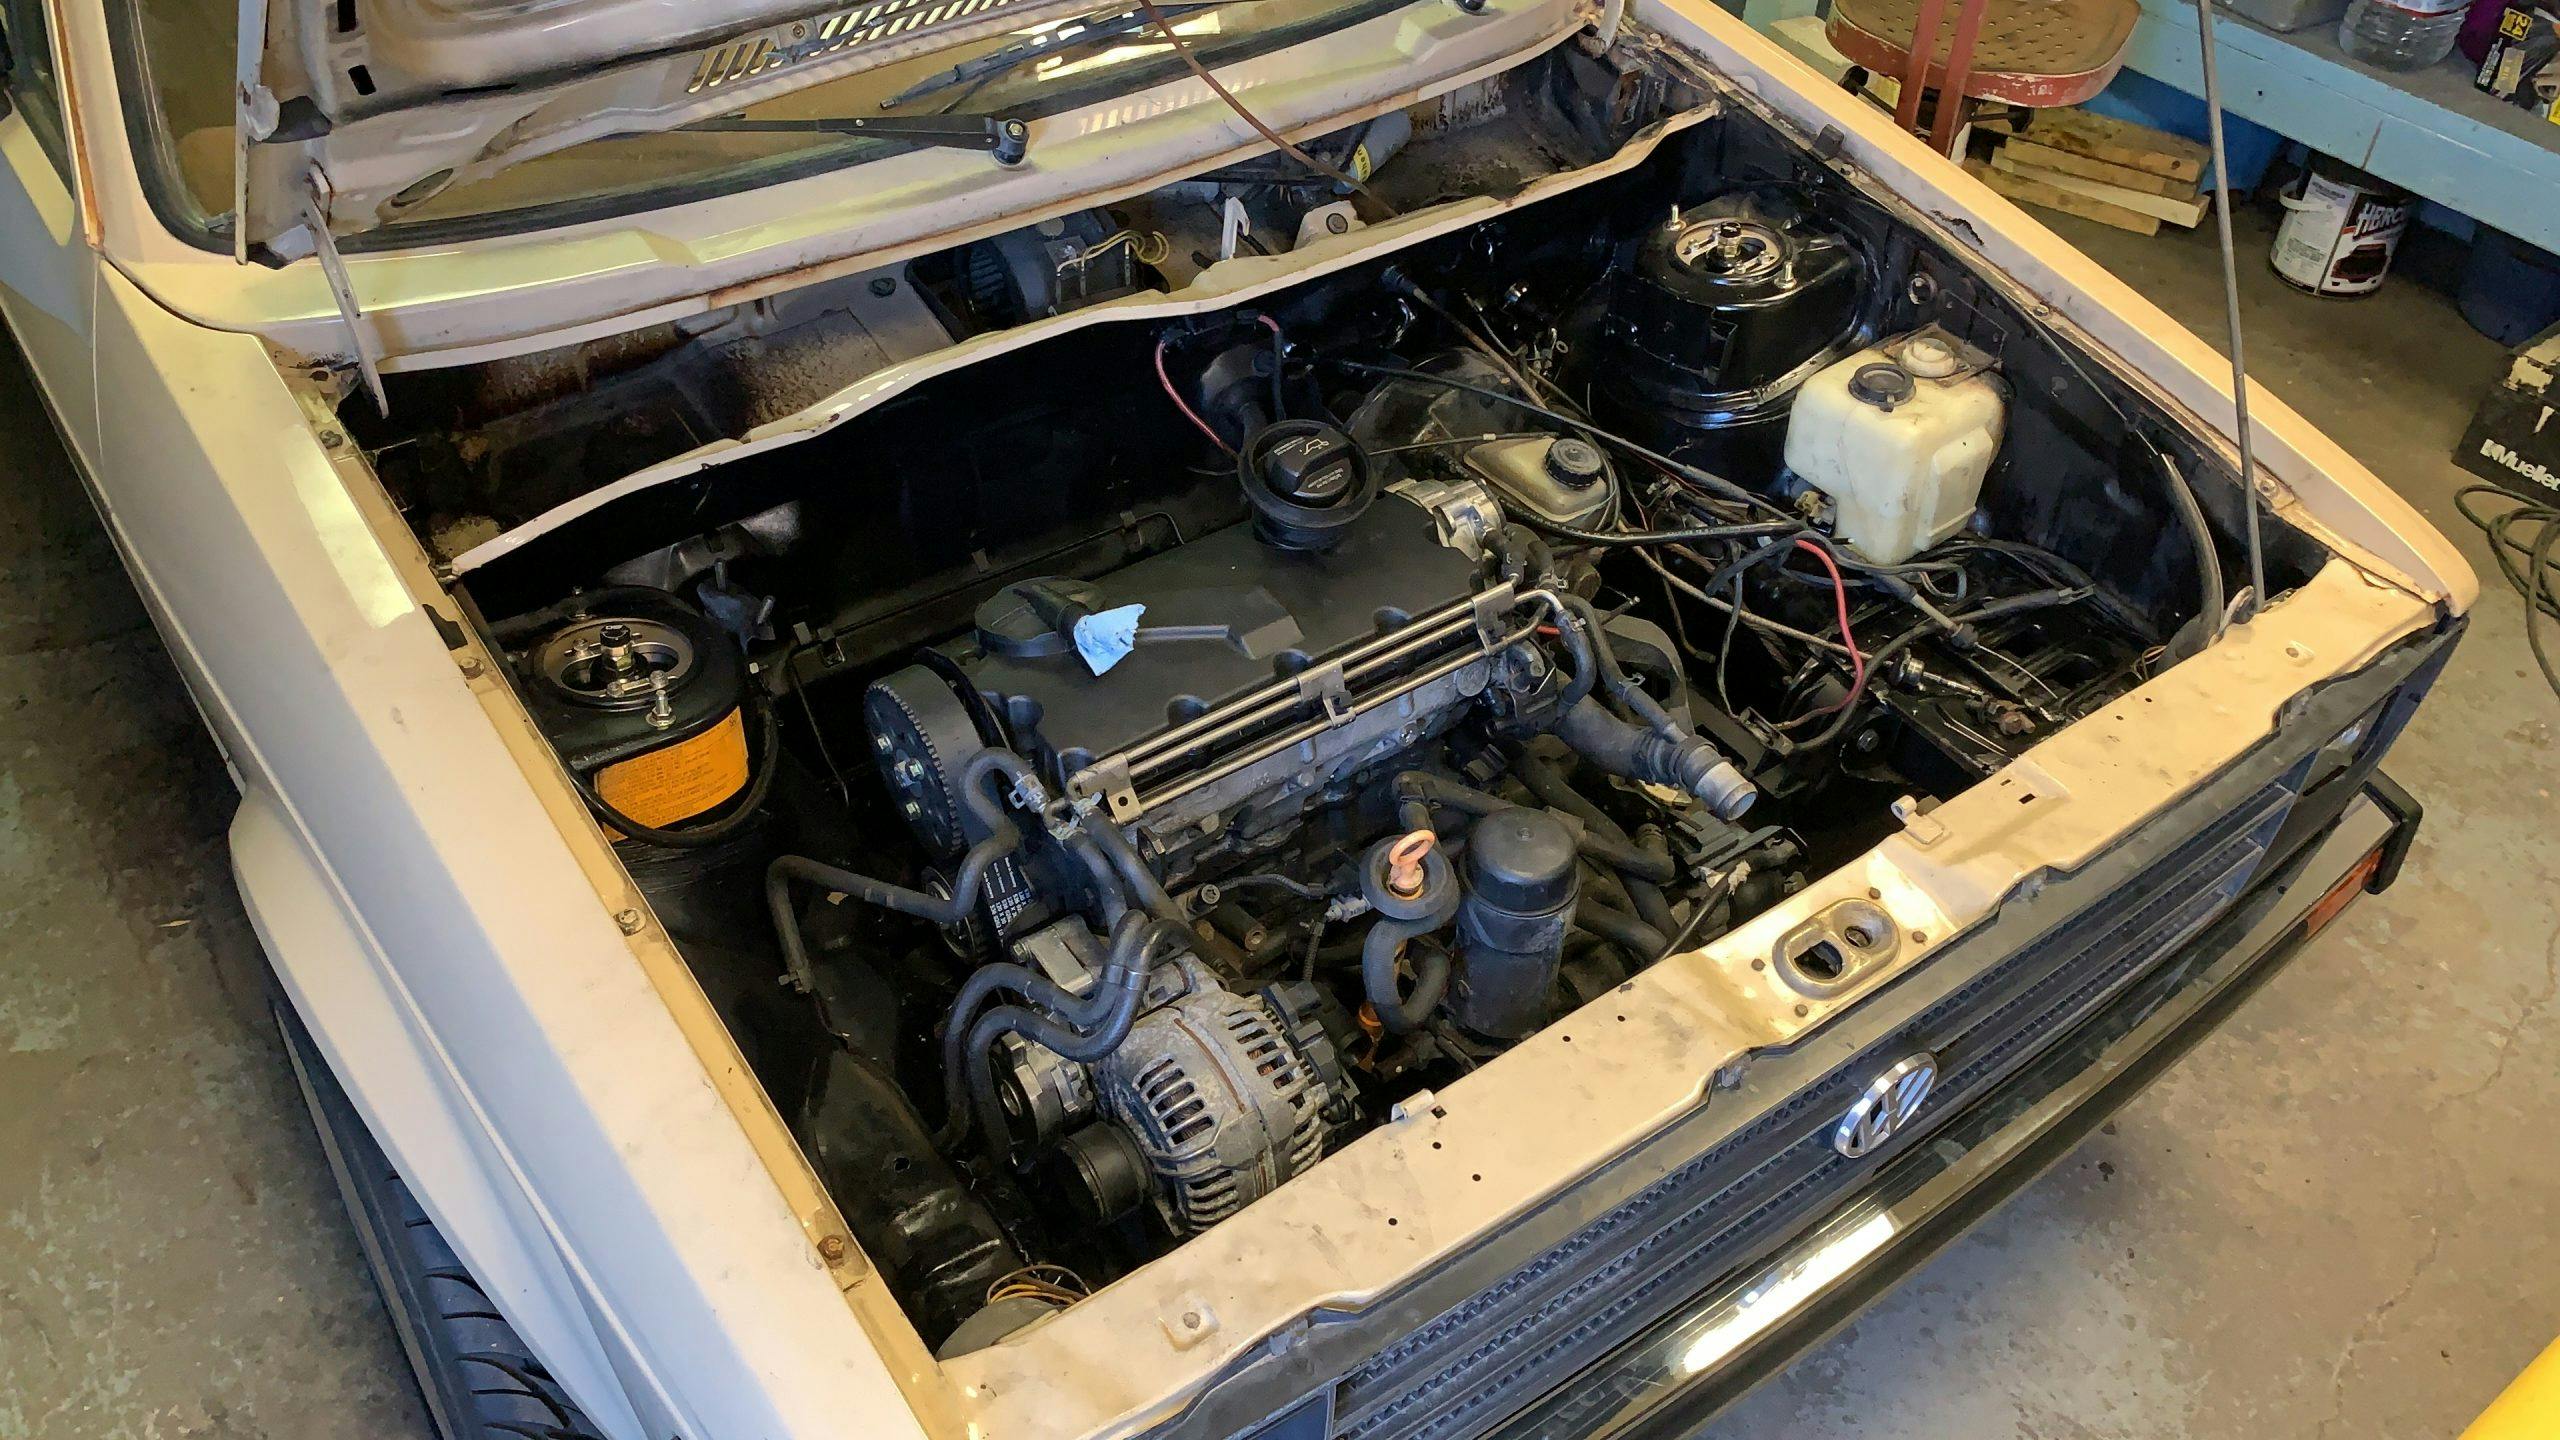 1980 VW Rabbit TDI swap engine Sep 01, 6 29 09 PM